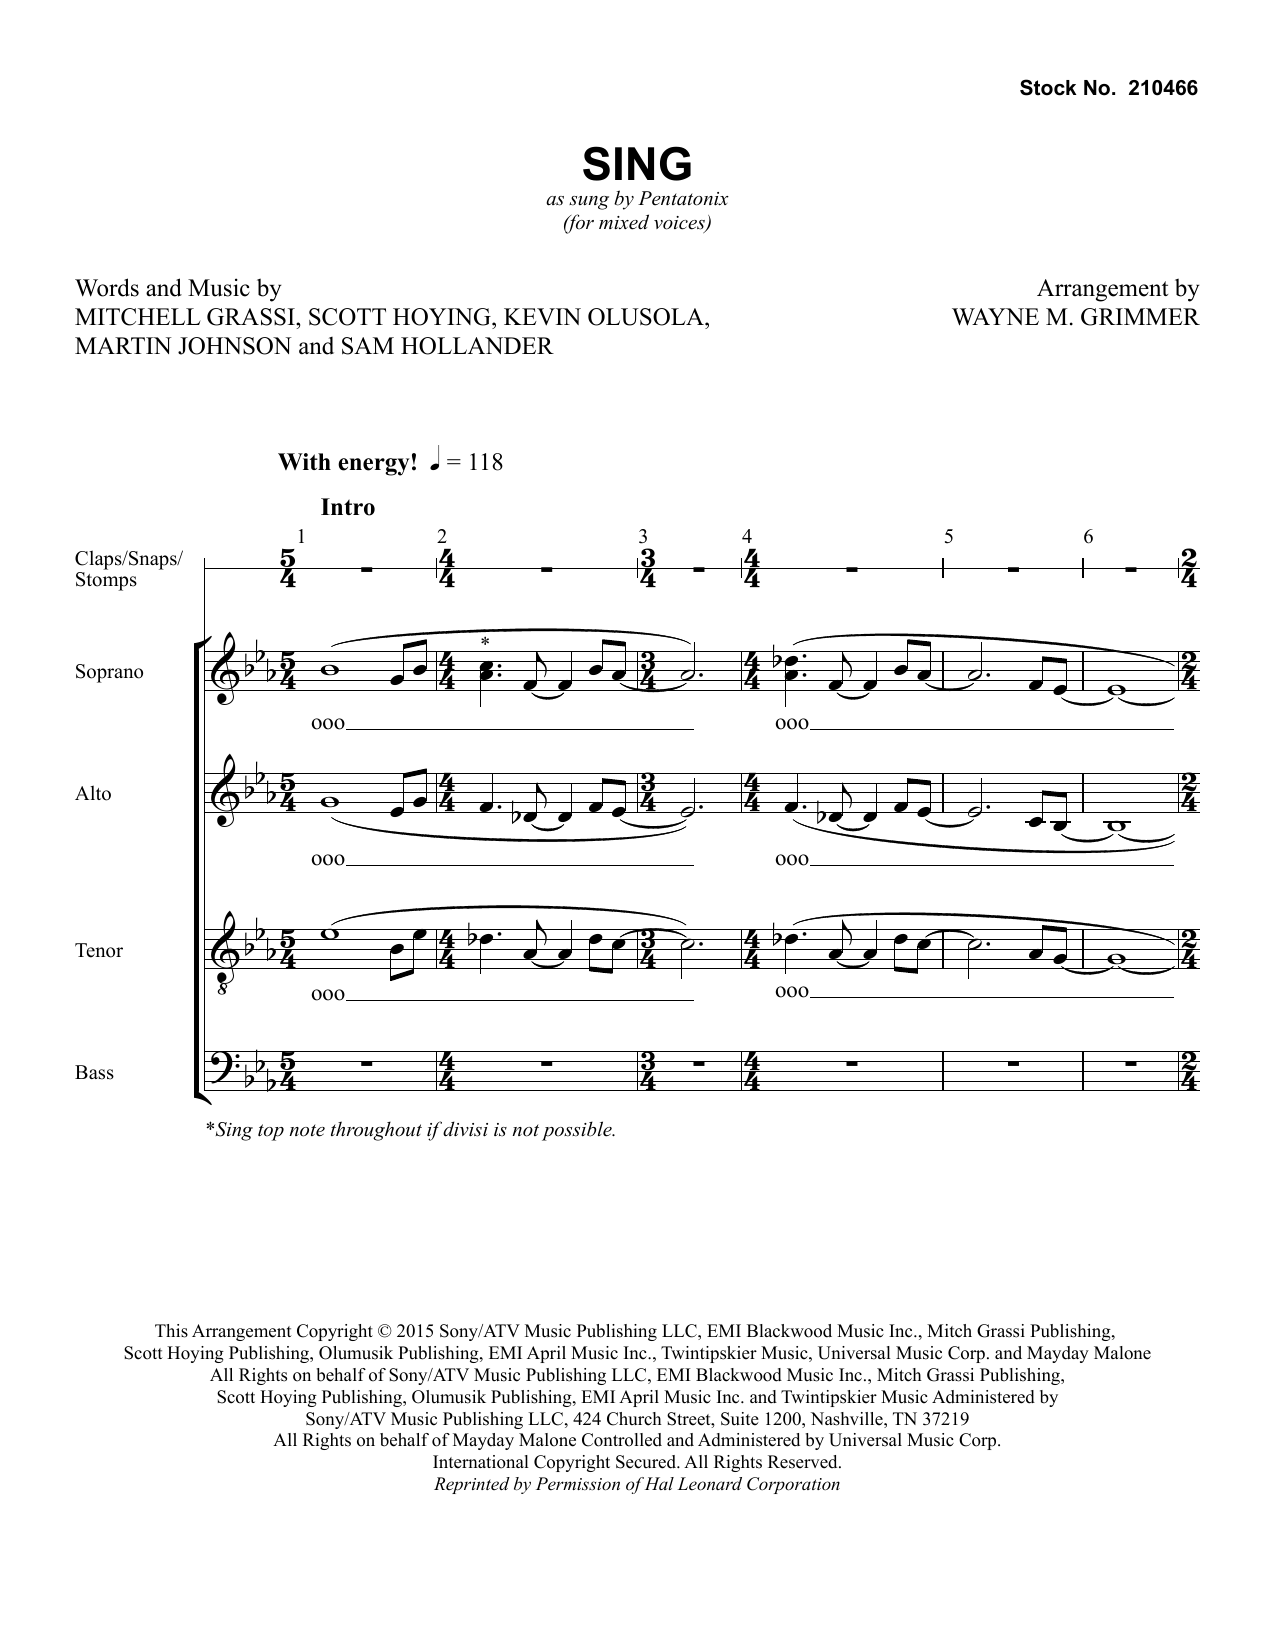 Pentatonix Sing (arr. Wayne Grimmer) sheet music notes and chords arranged for SATB Choir